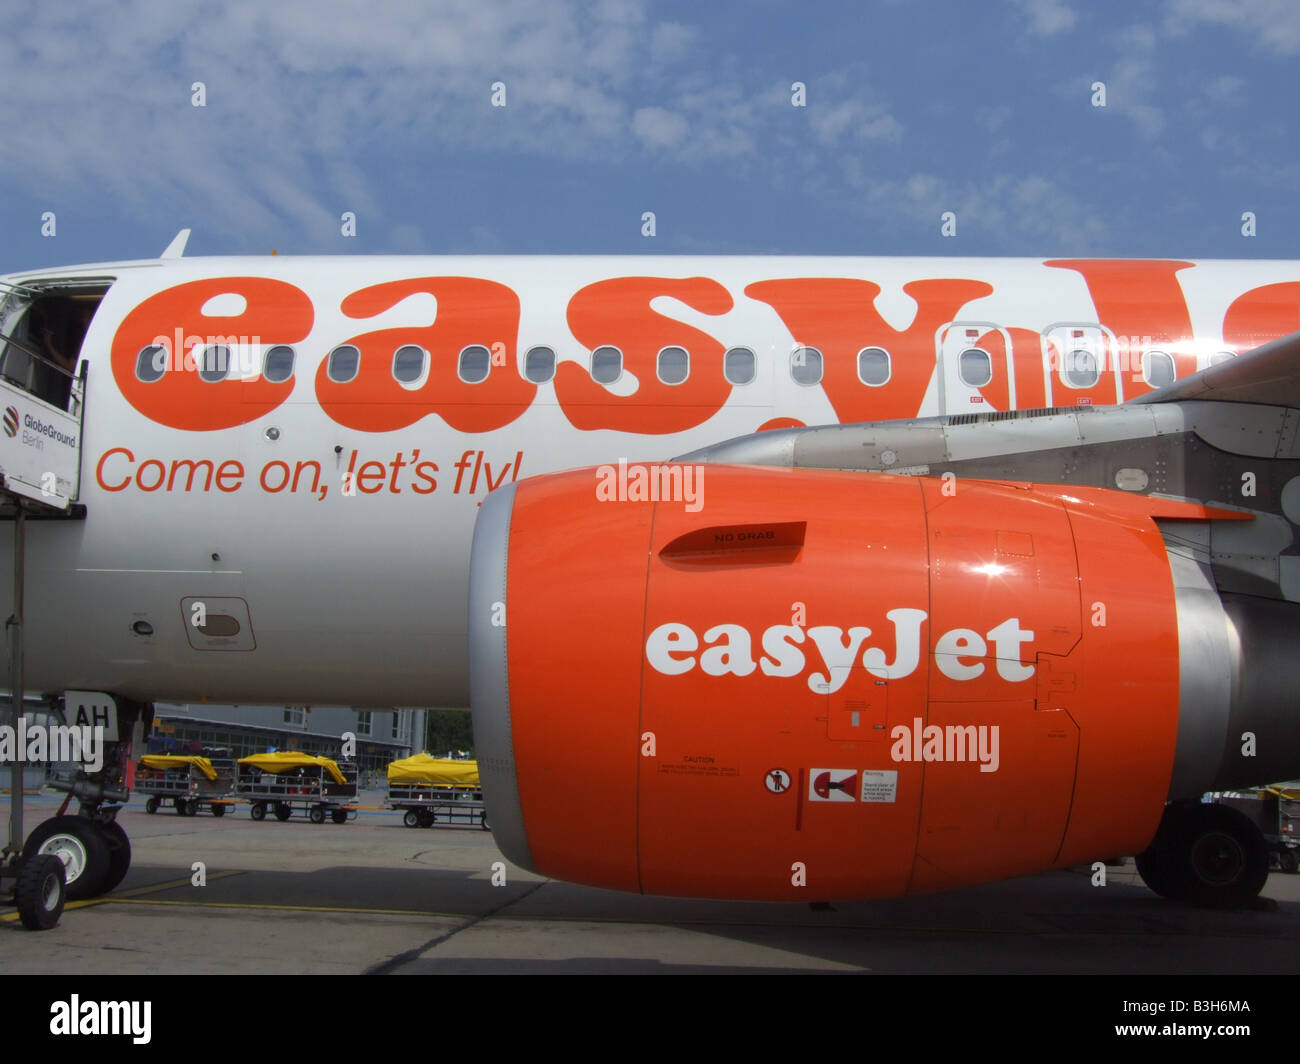 detail of easy jet plane on airport tarmac Stock Photo